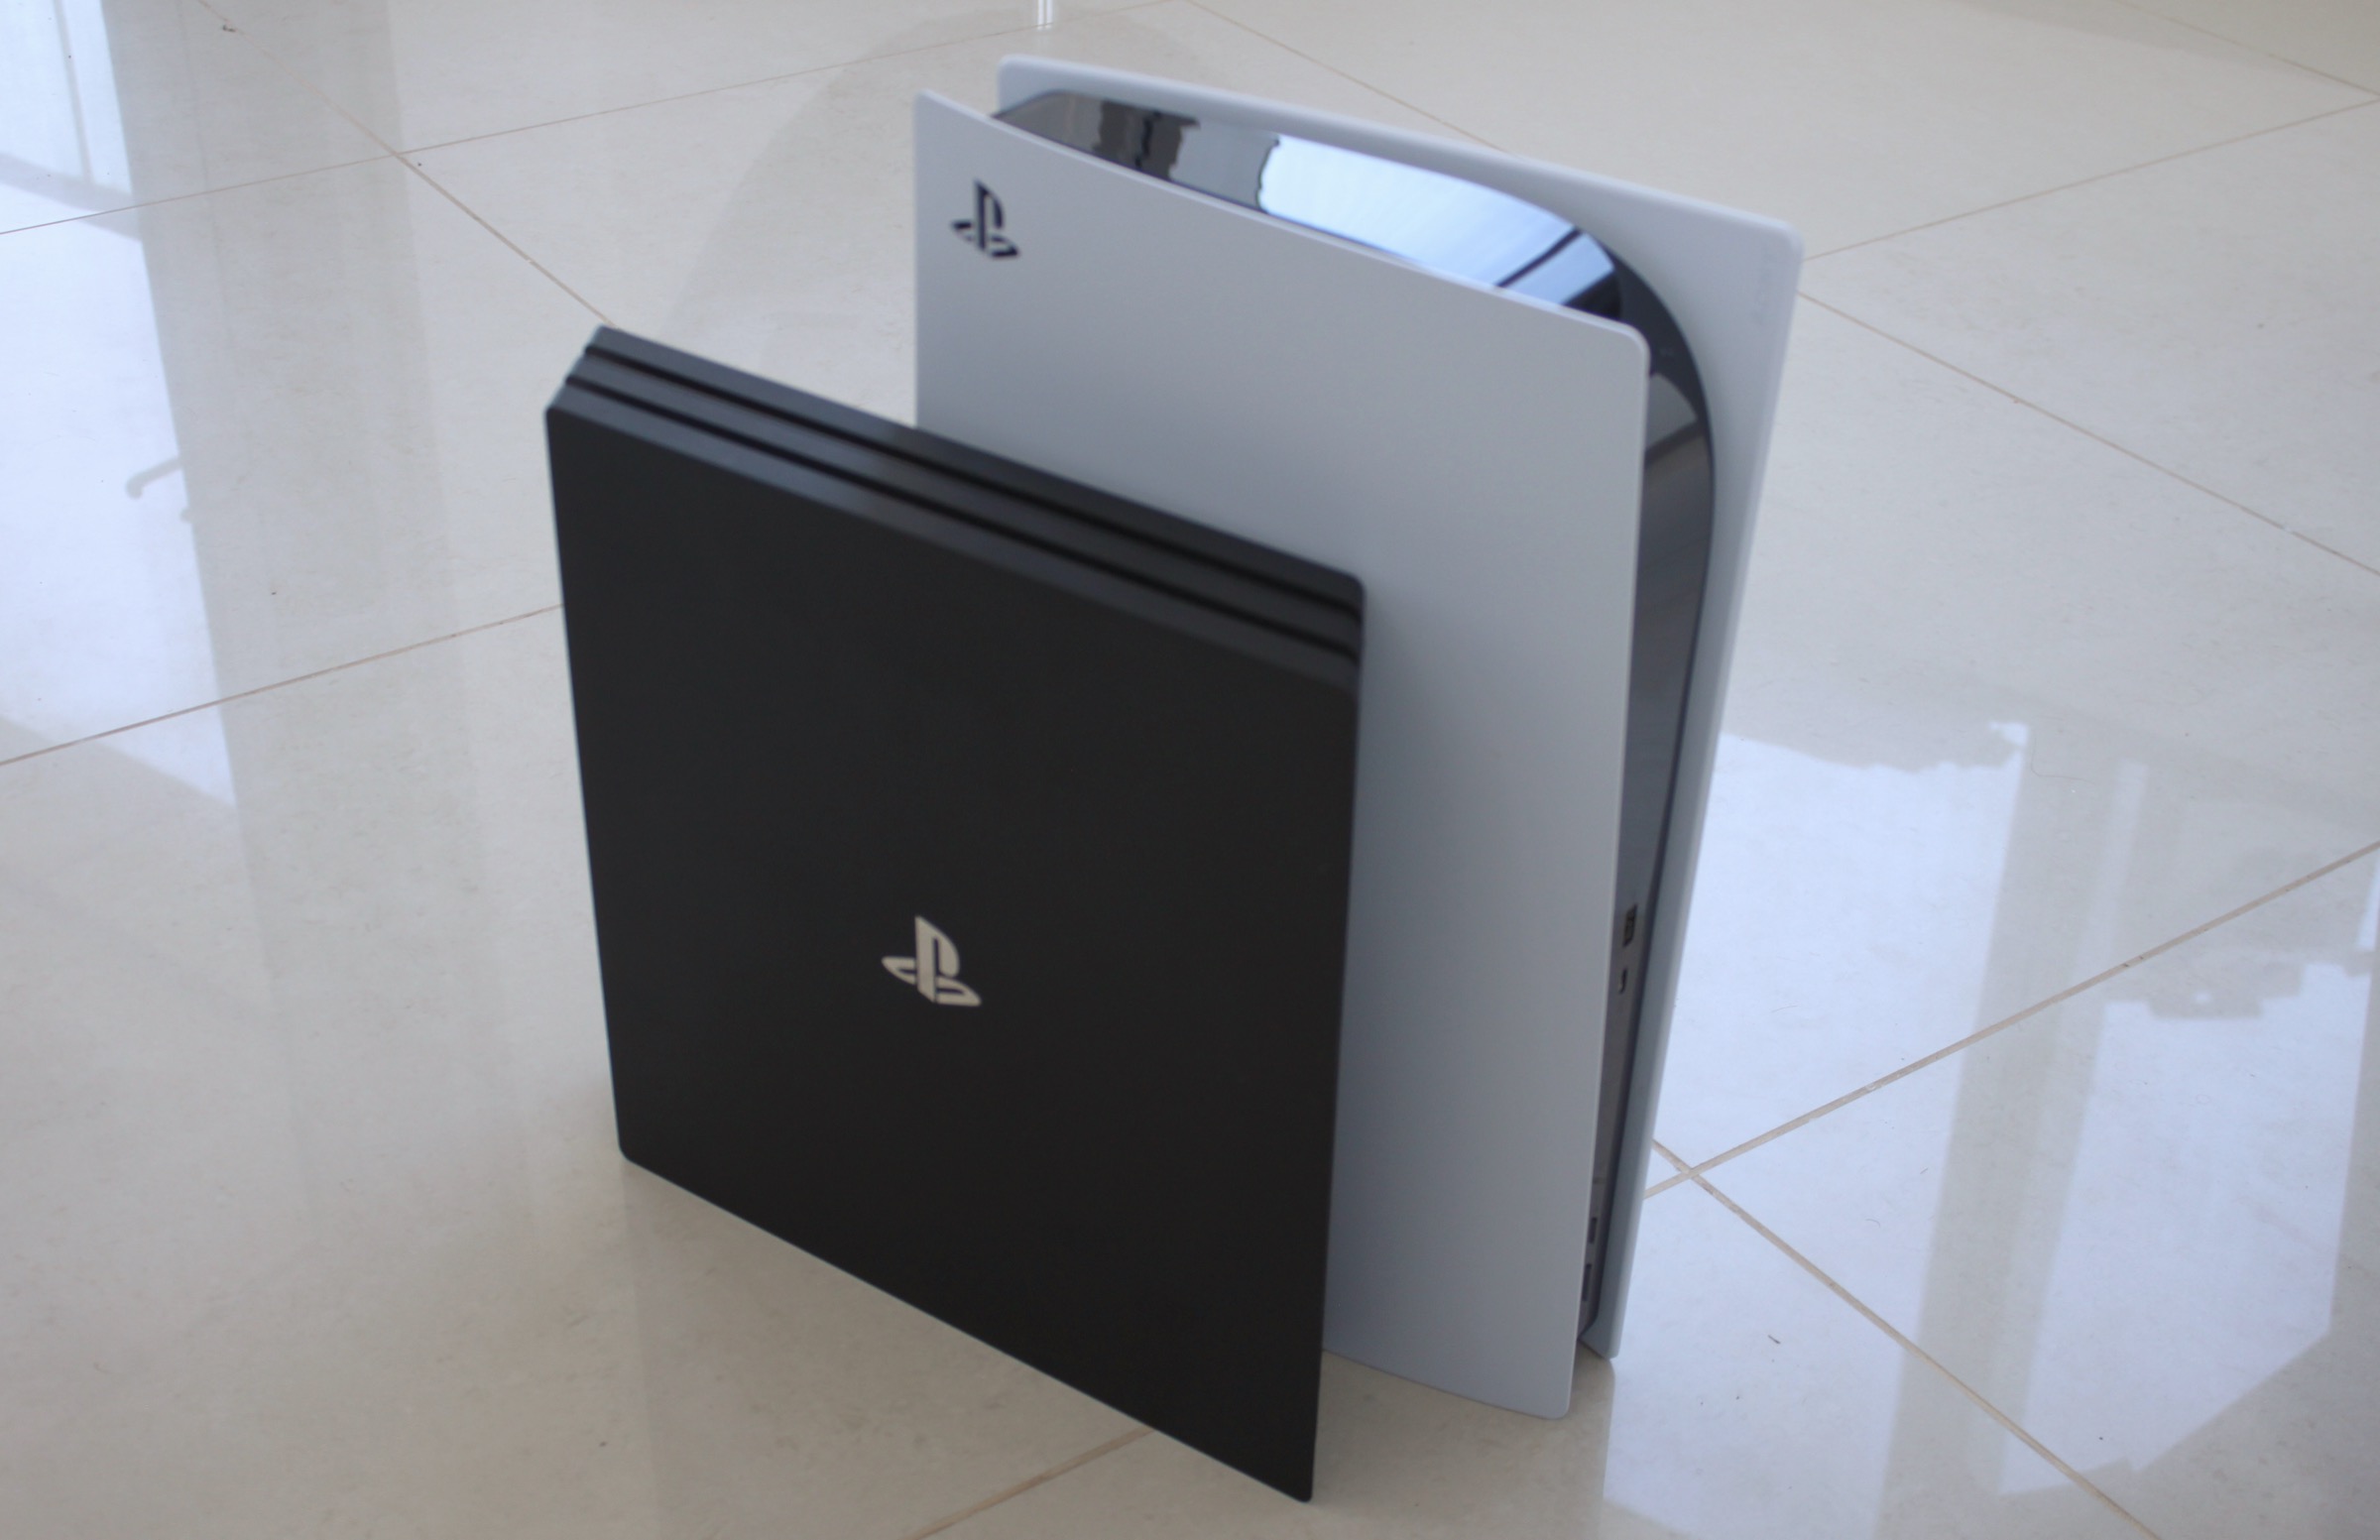 PlayStation 5 review - FlatpanelsHD